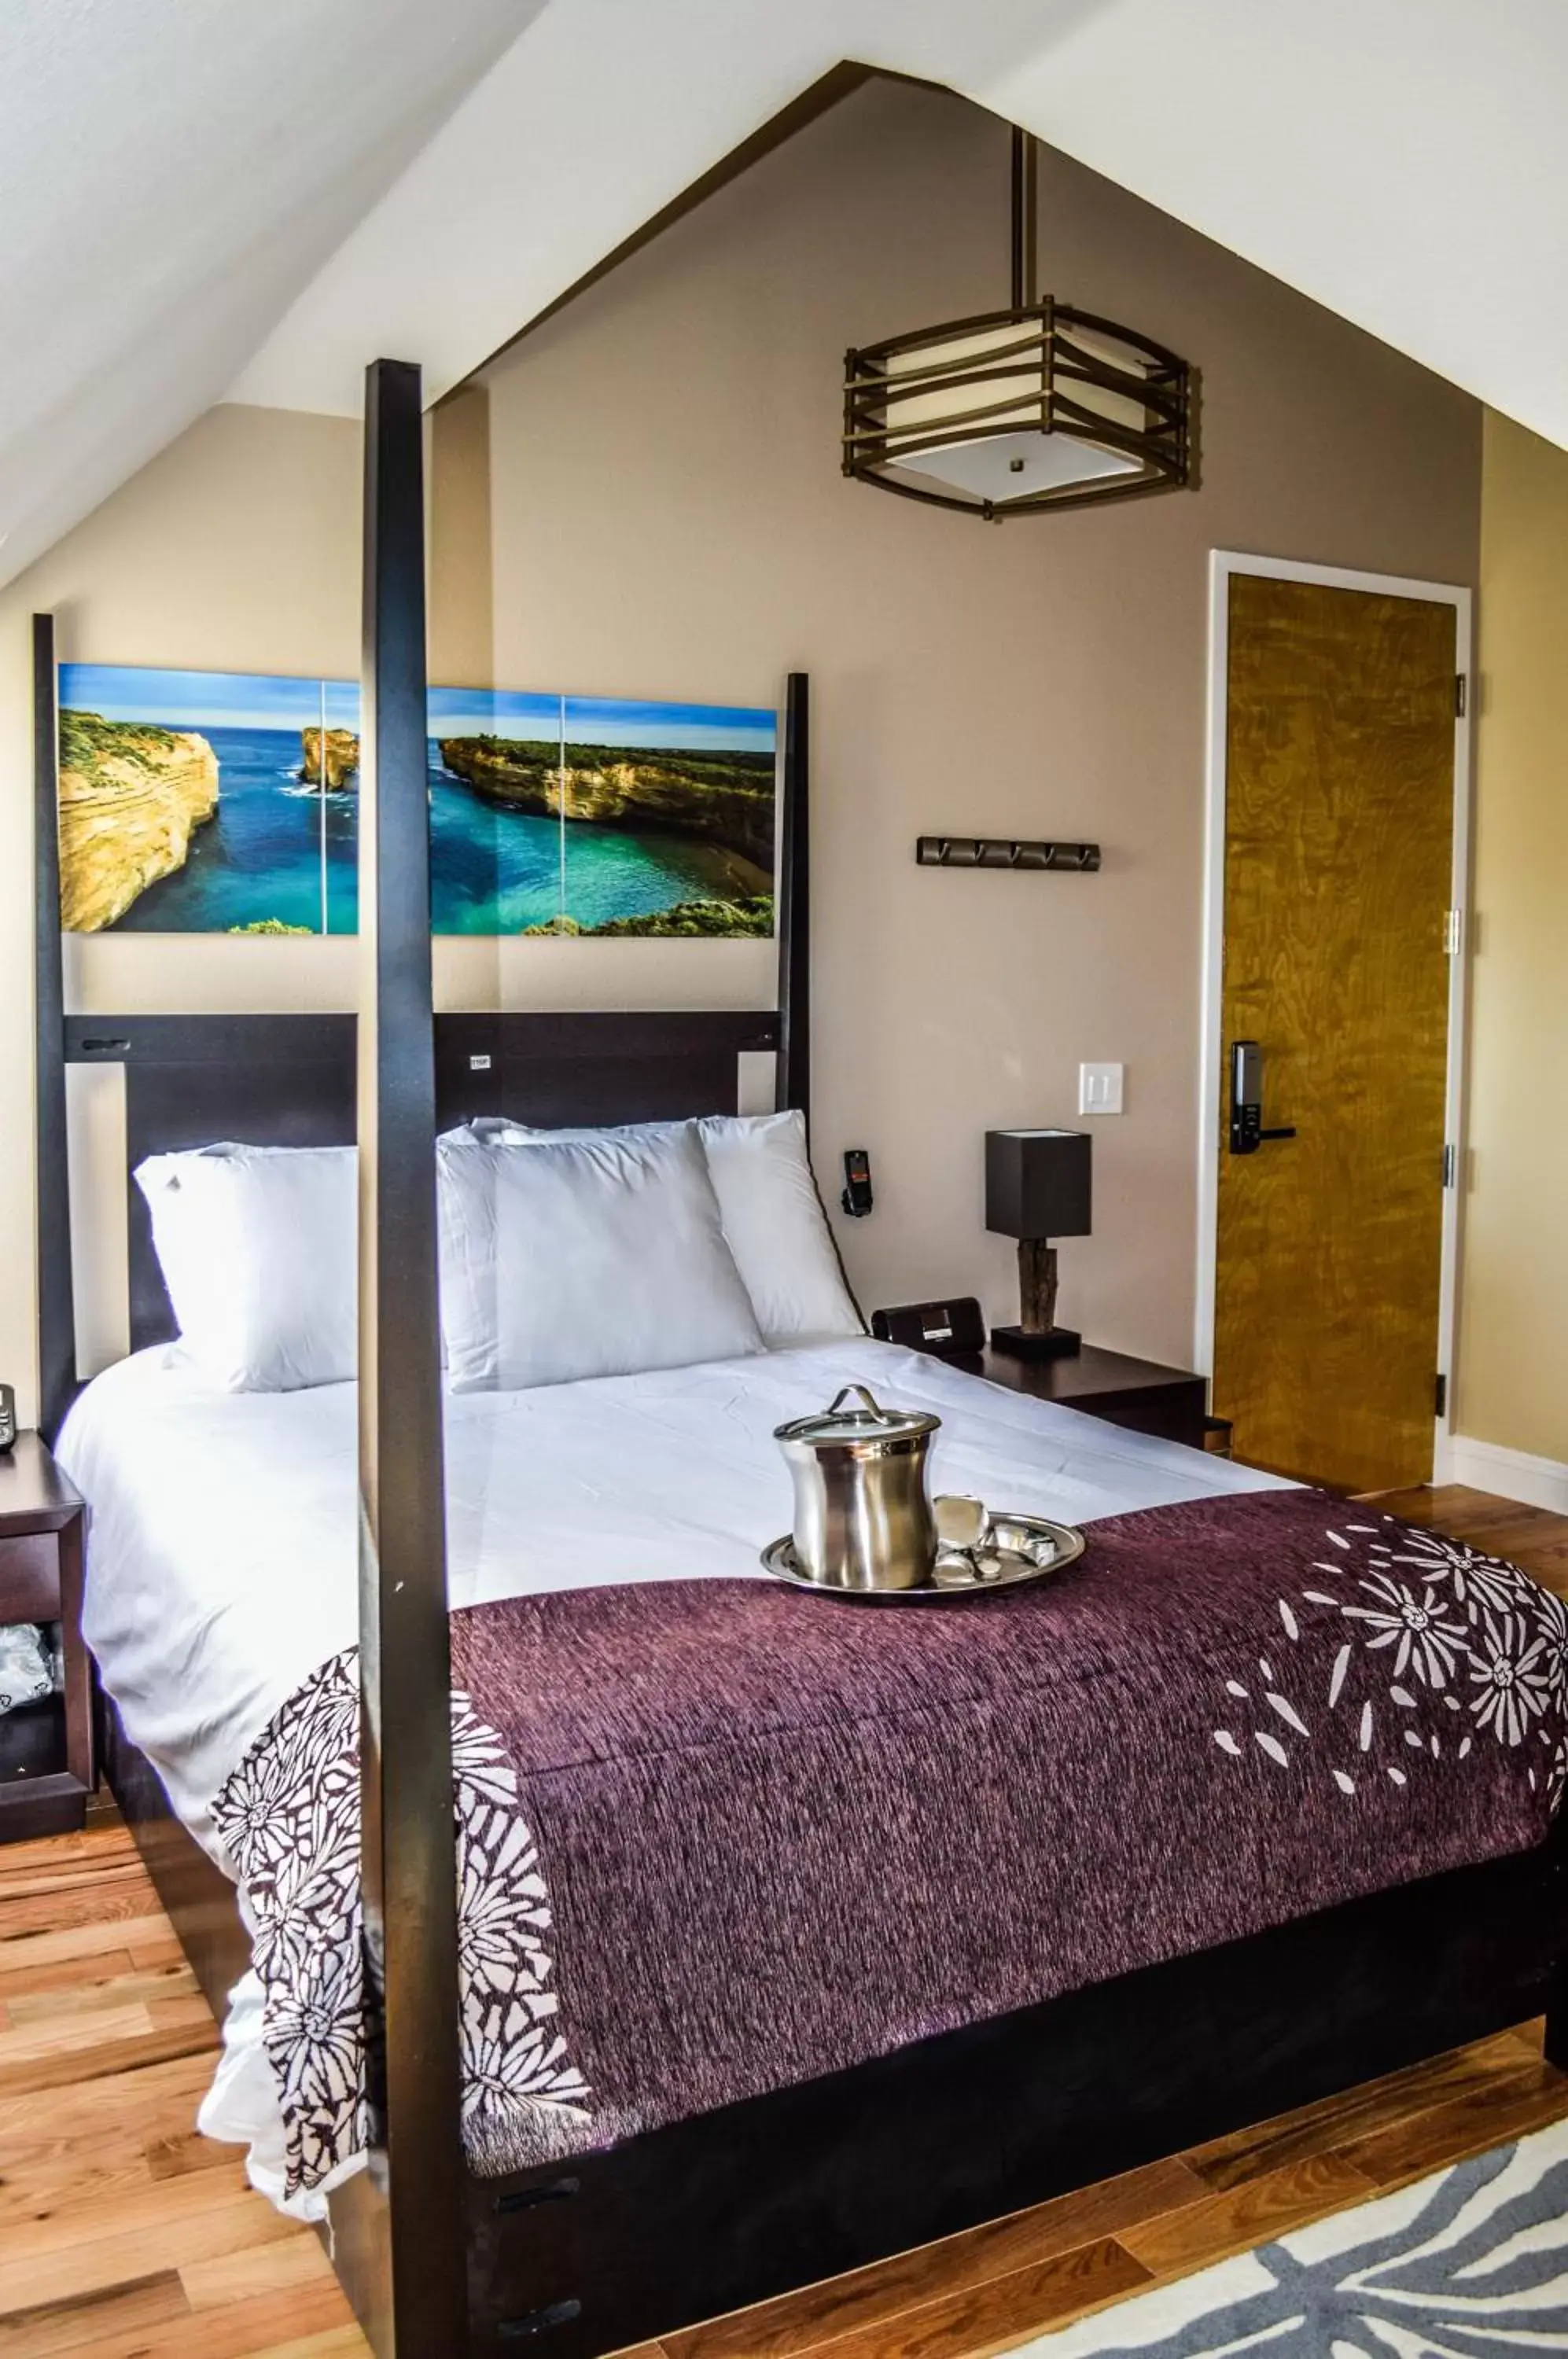 Economy Queen Room (# 10) in Rio Vista Inn & Suites Santa Cruz